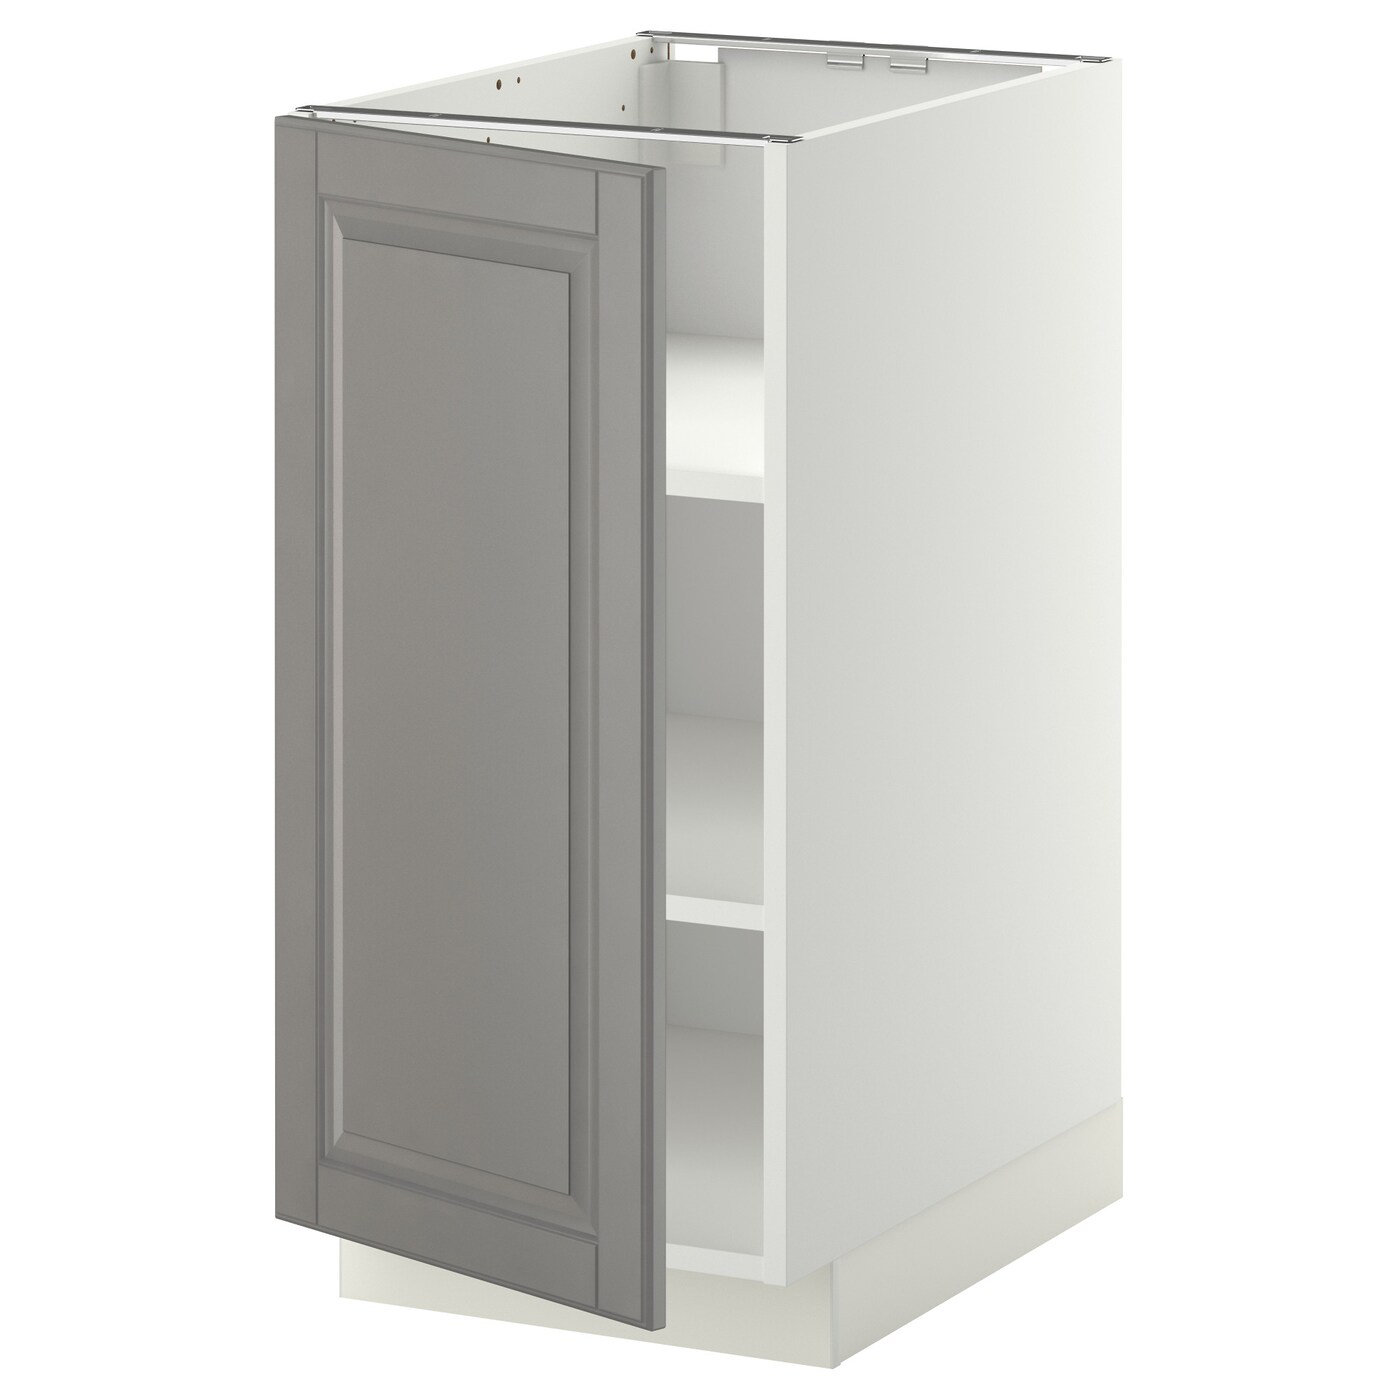 Шкаф под раковину  - IKEA METOD, 88x62x40см, белый/серый, МЕТОД ИКЕА